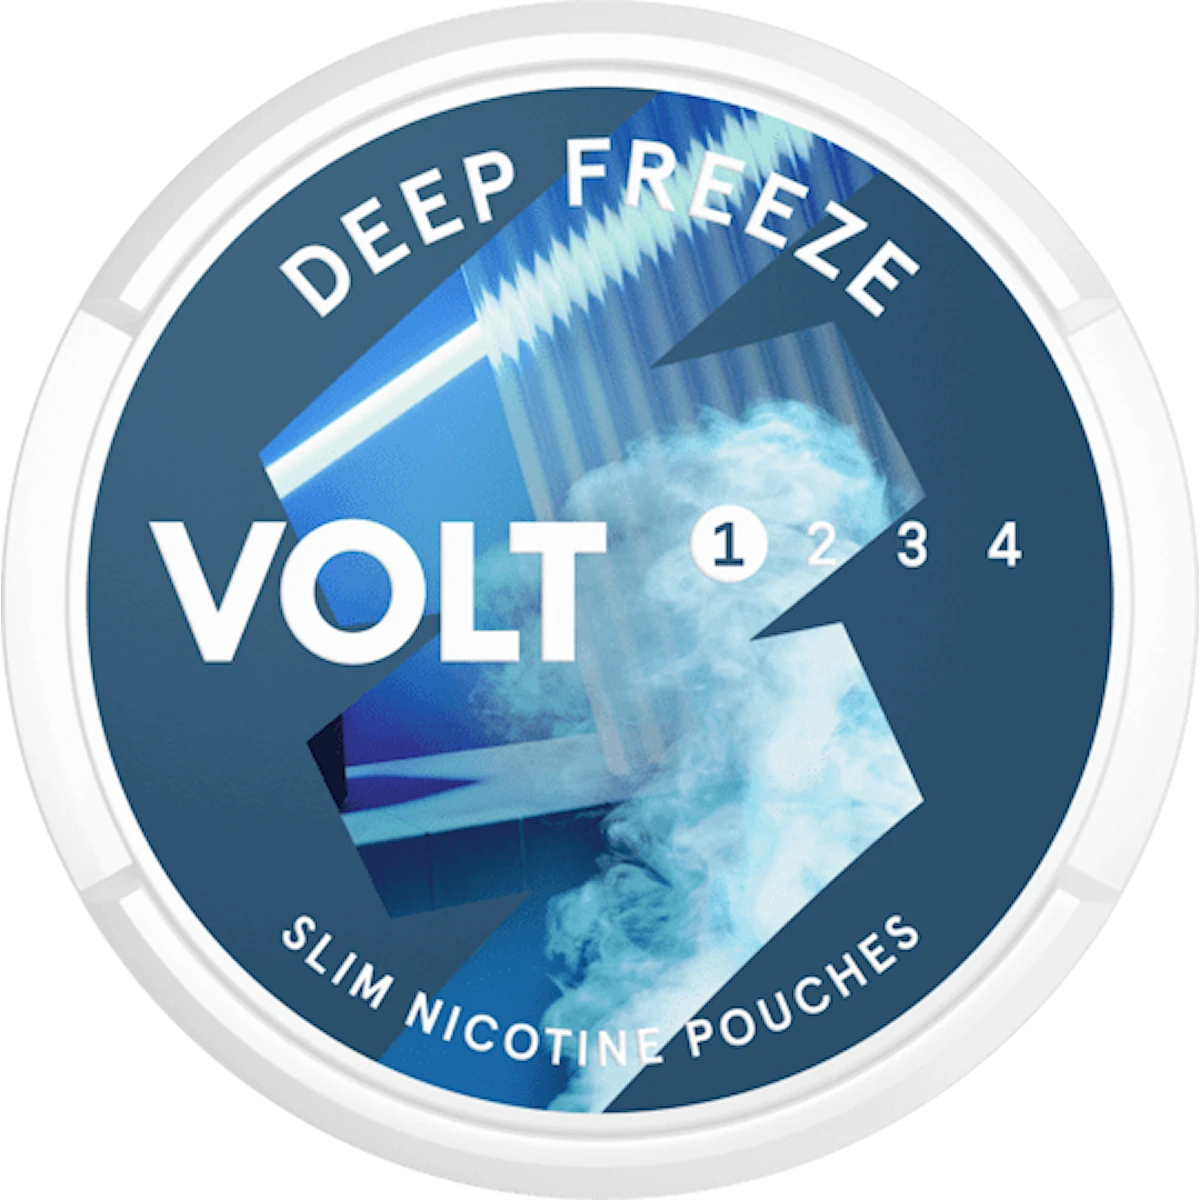 VOLT Deep Freeze Slim Low